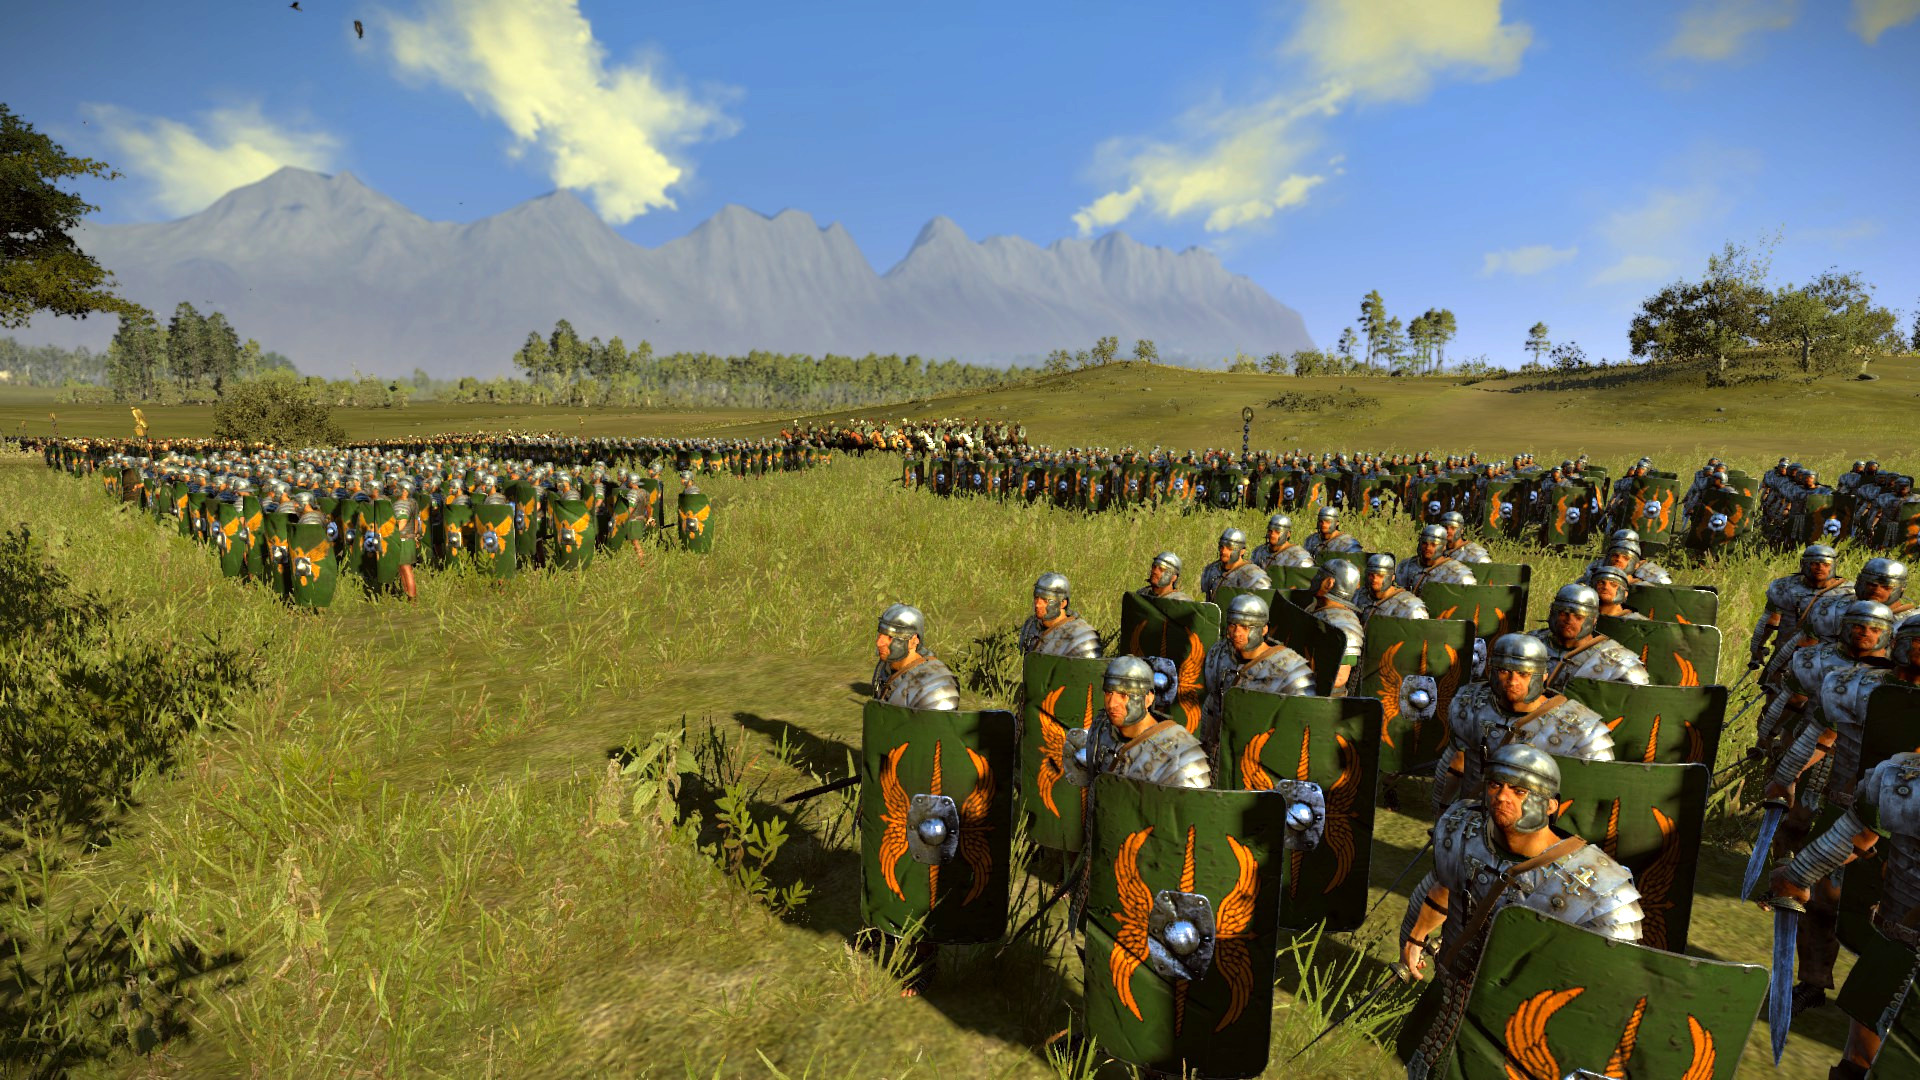 Modding Rome Total War (Avatar, The Last Airbender mod) using R